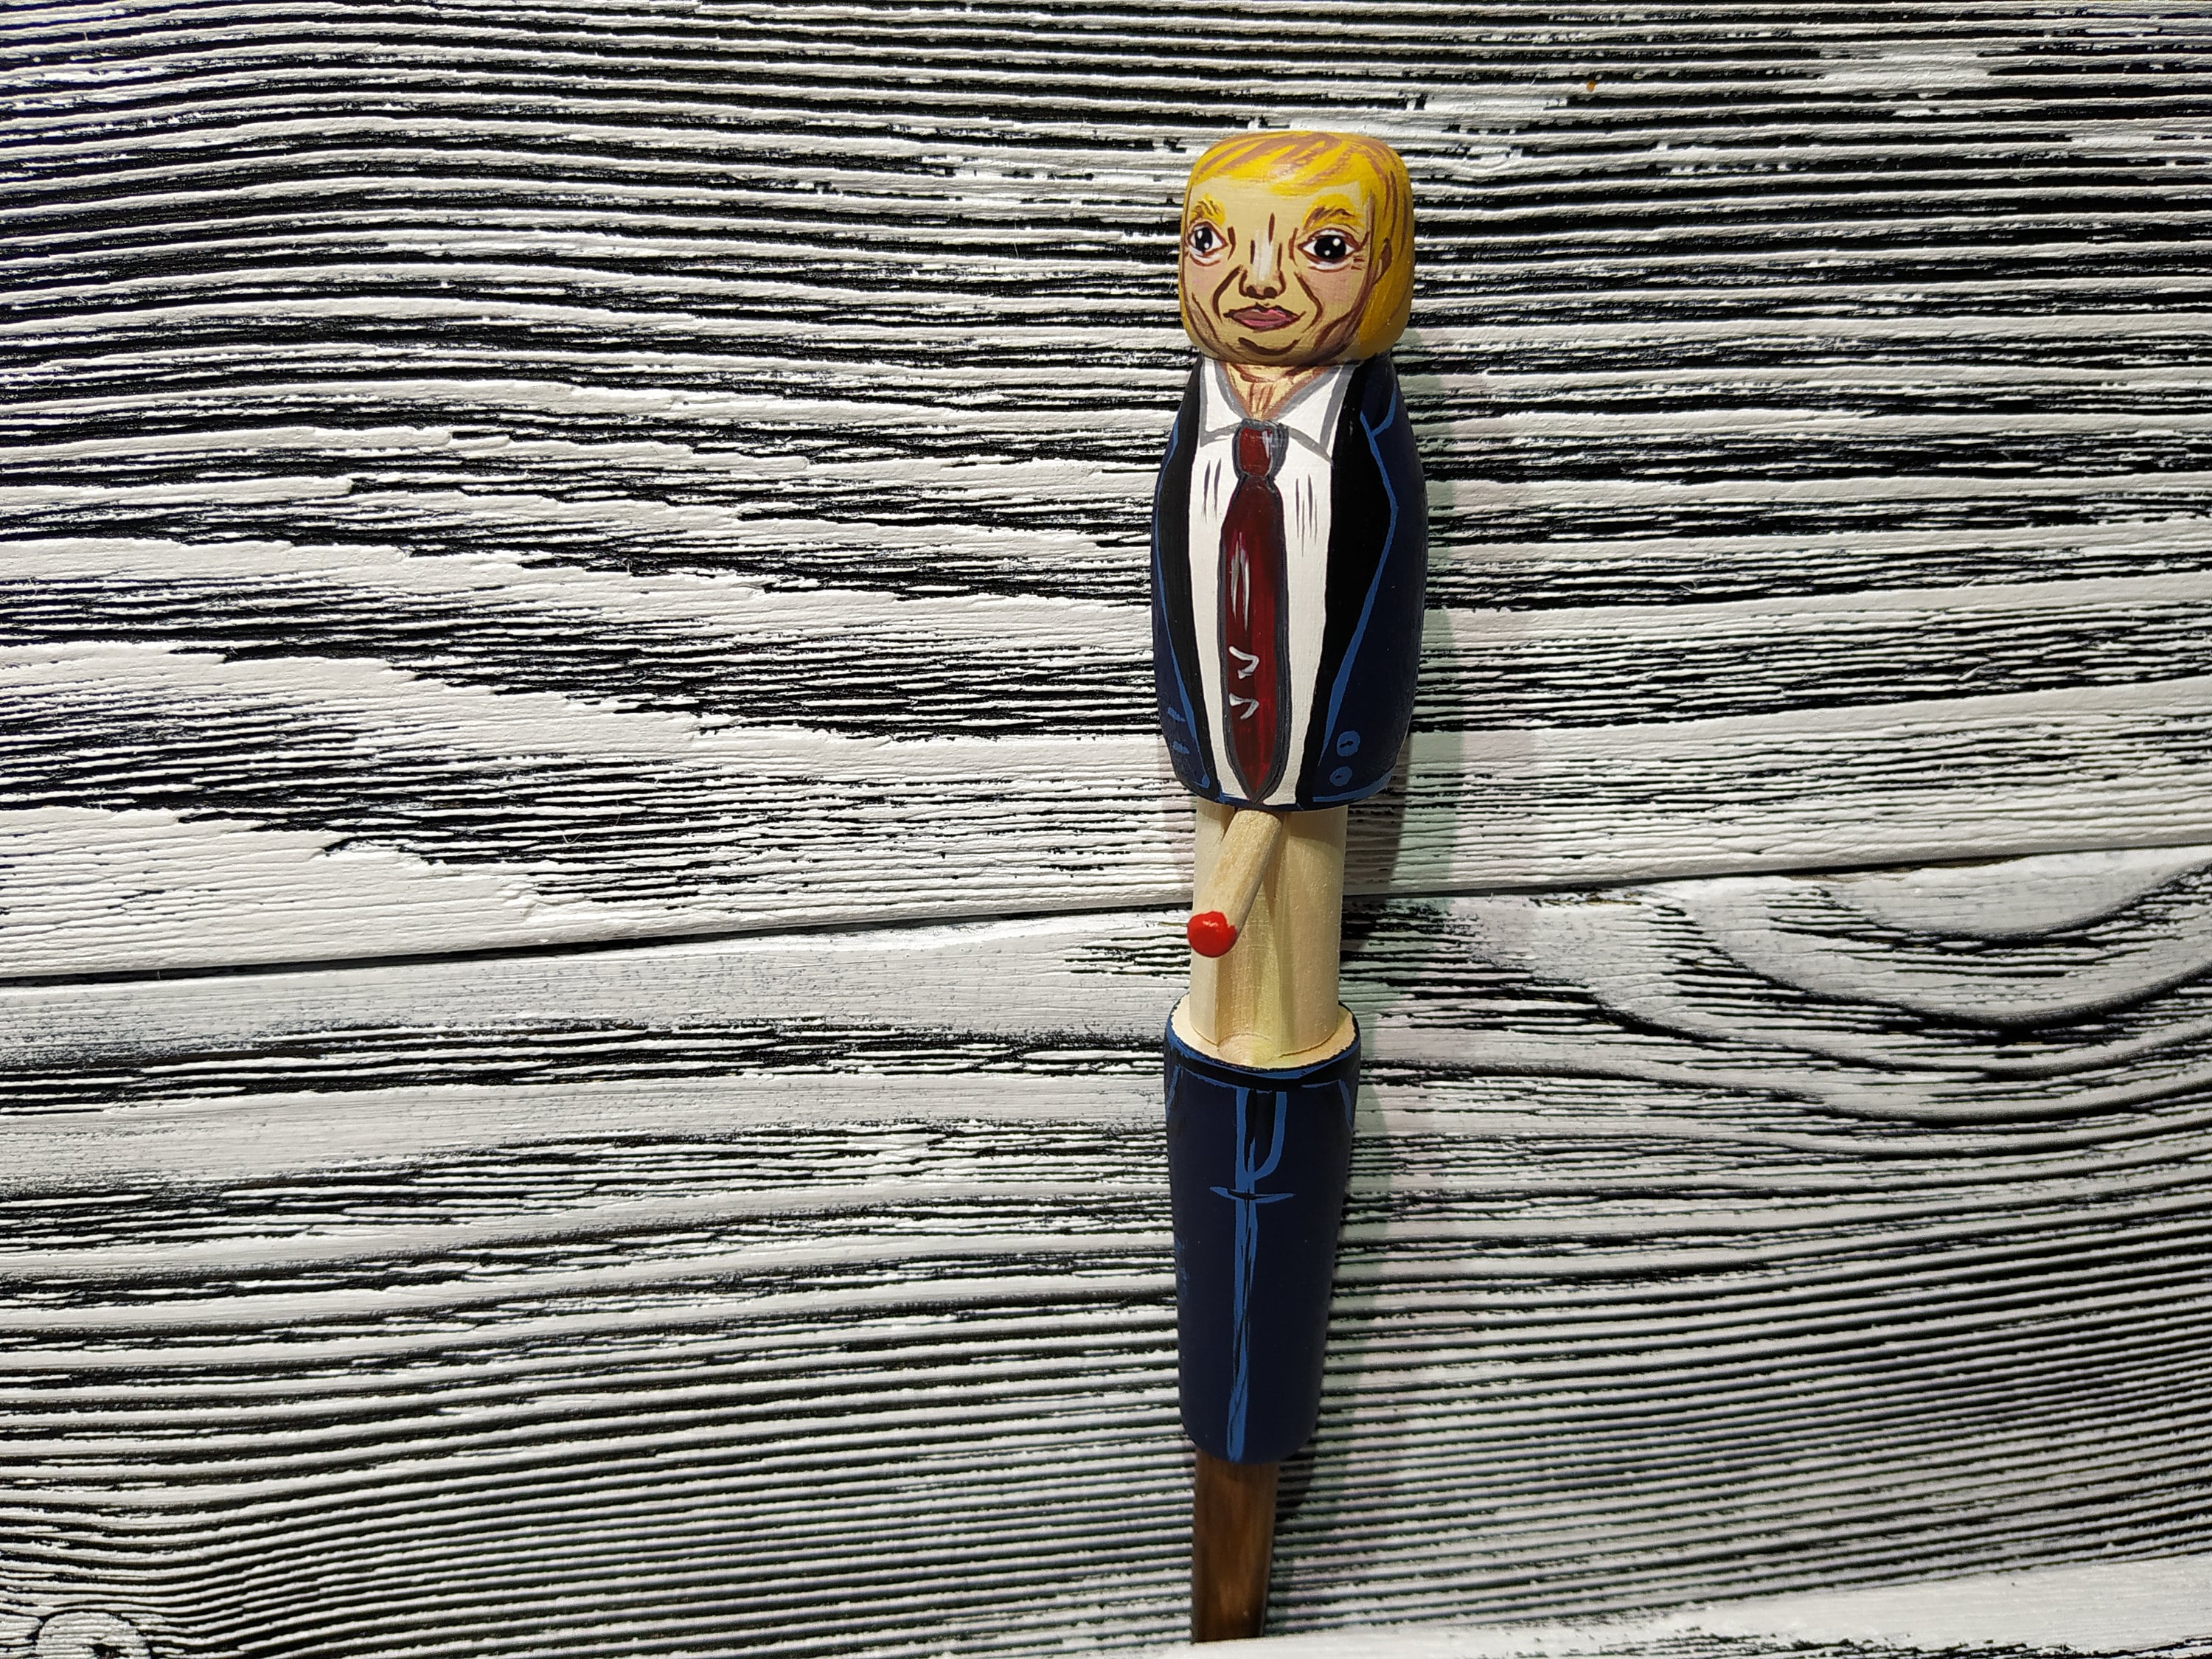 Donald Trump Pen Holder